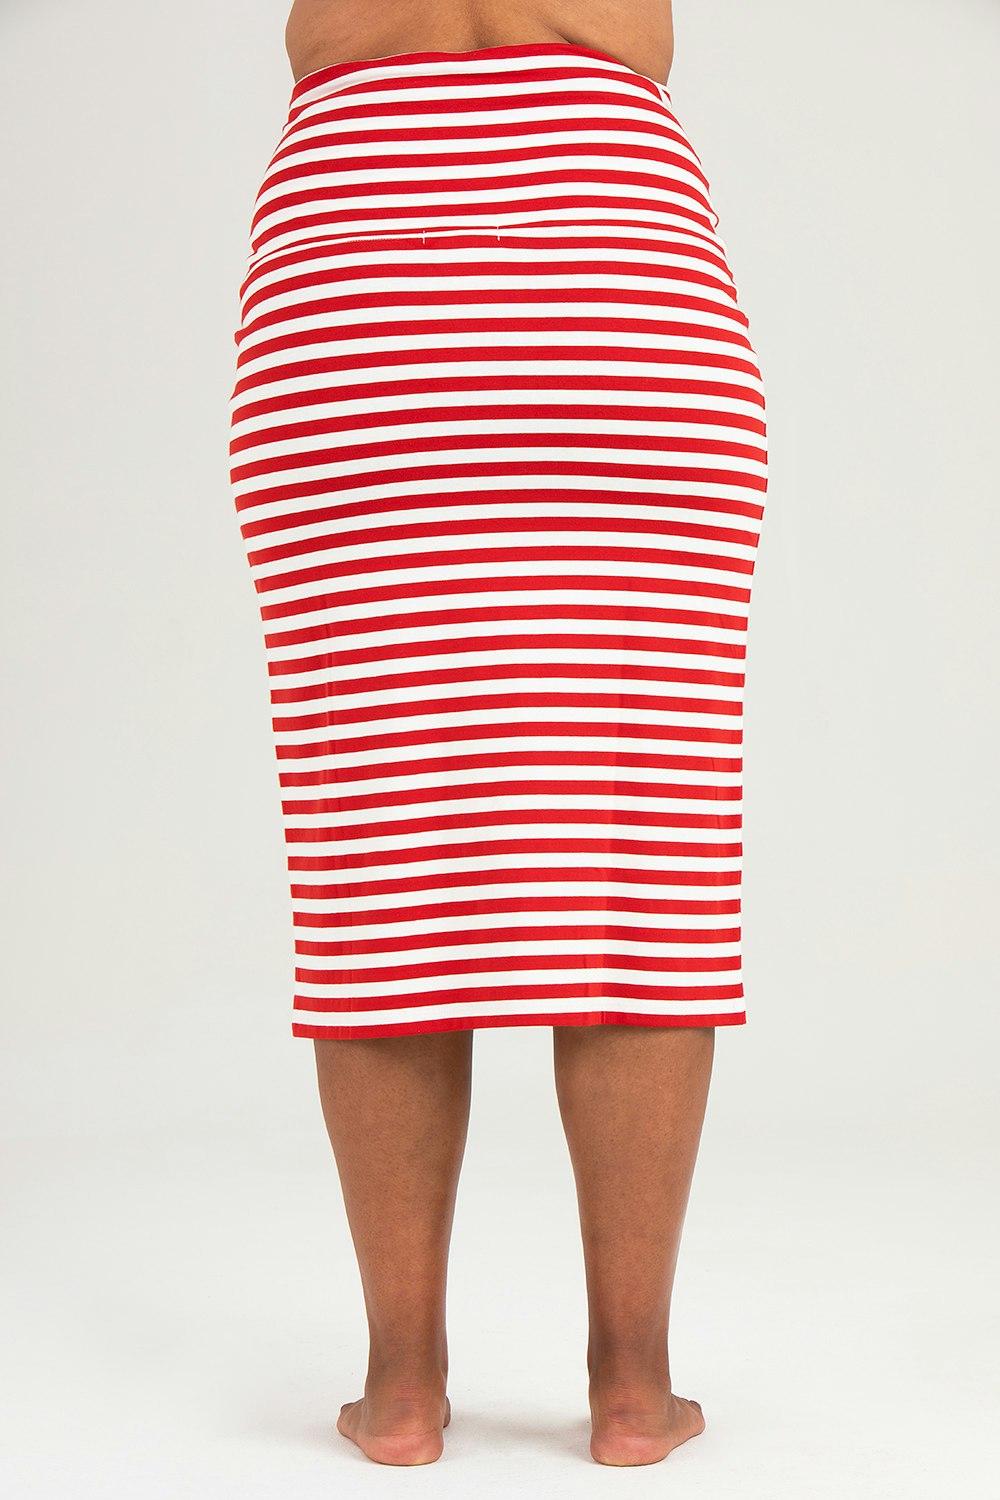 Bim skirt striped red/white